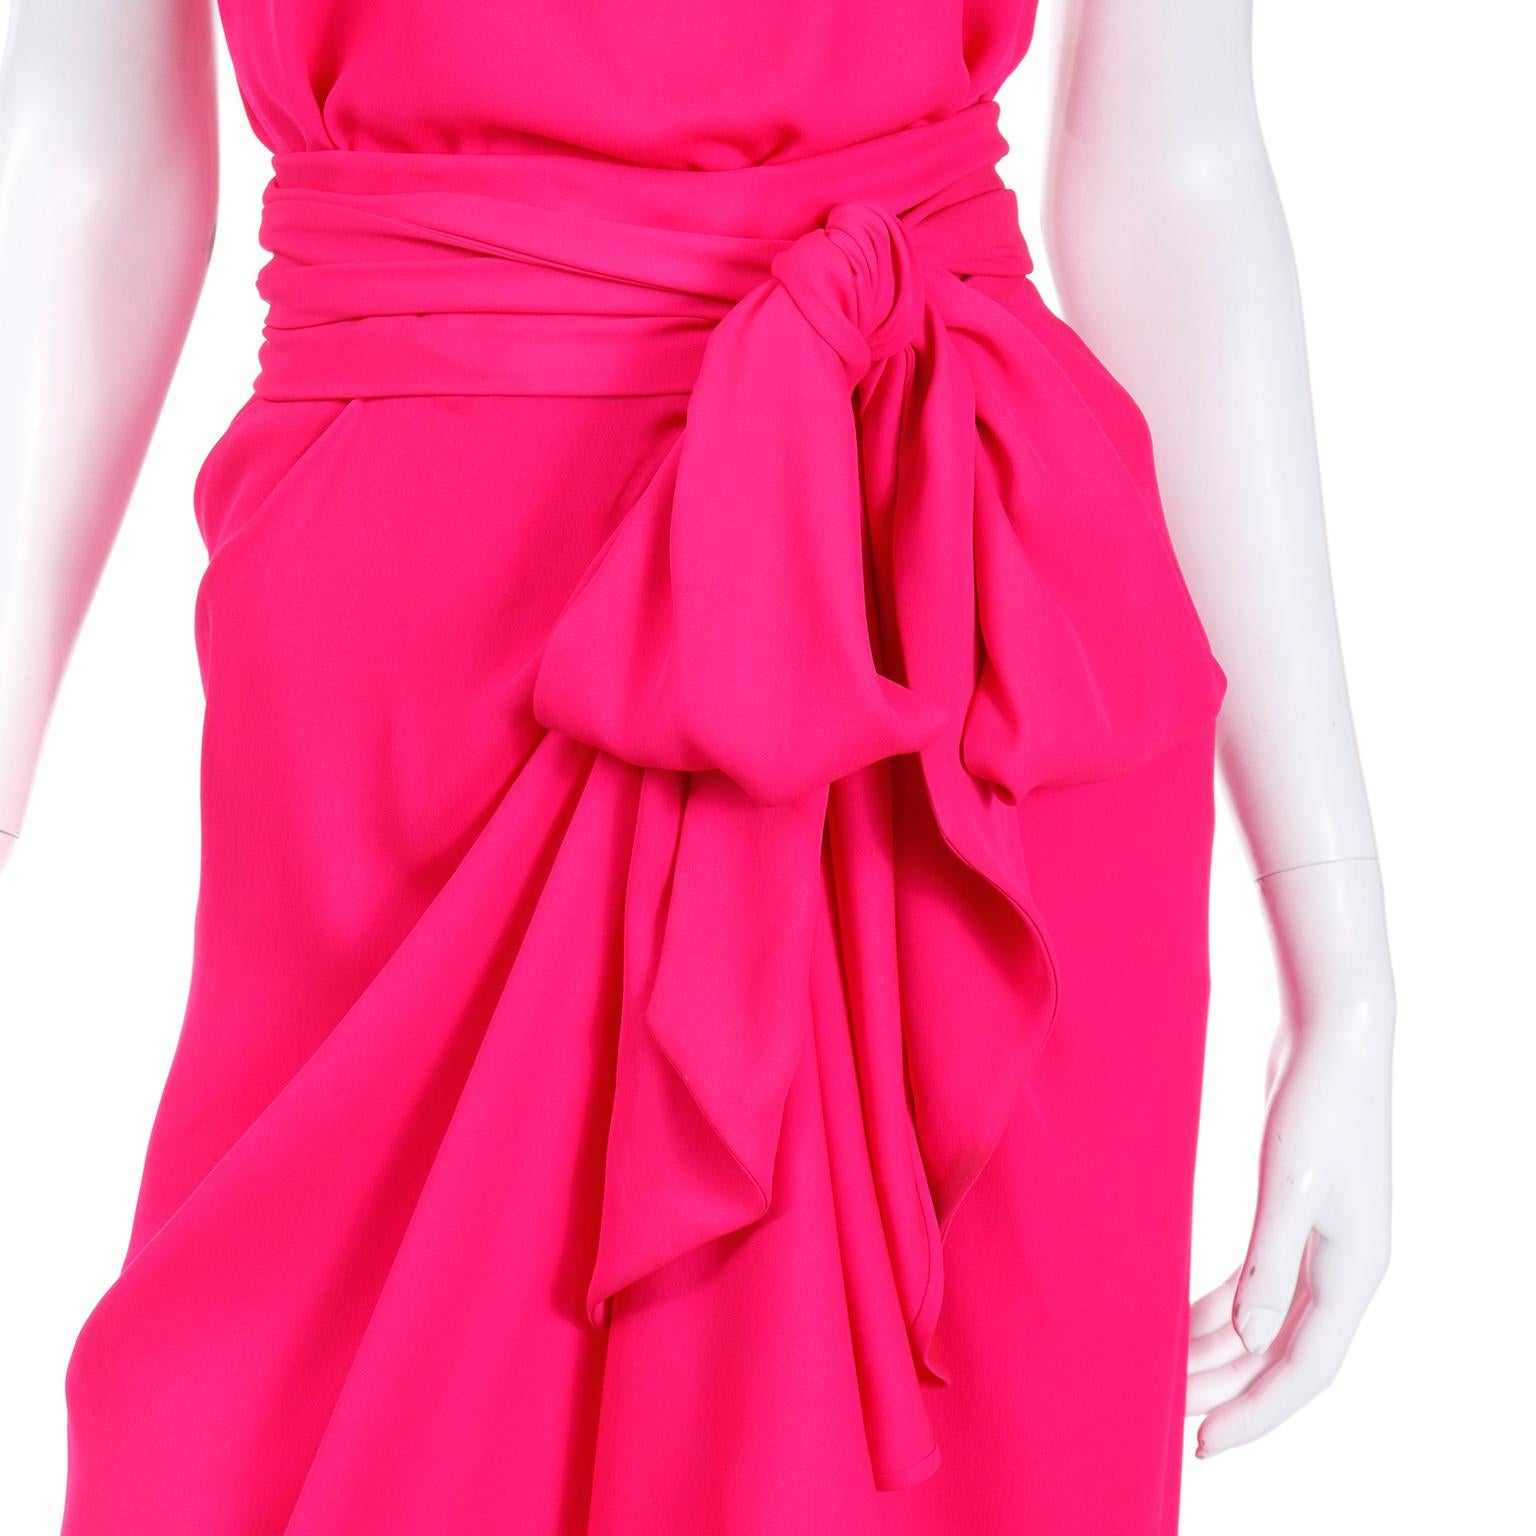 Yves Saint Laurent Haute Couture Pink Silk 2 Pc Evening Dress w Ruffled Skirt 5